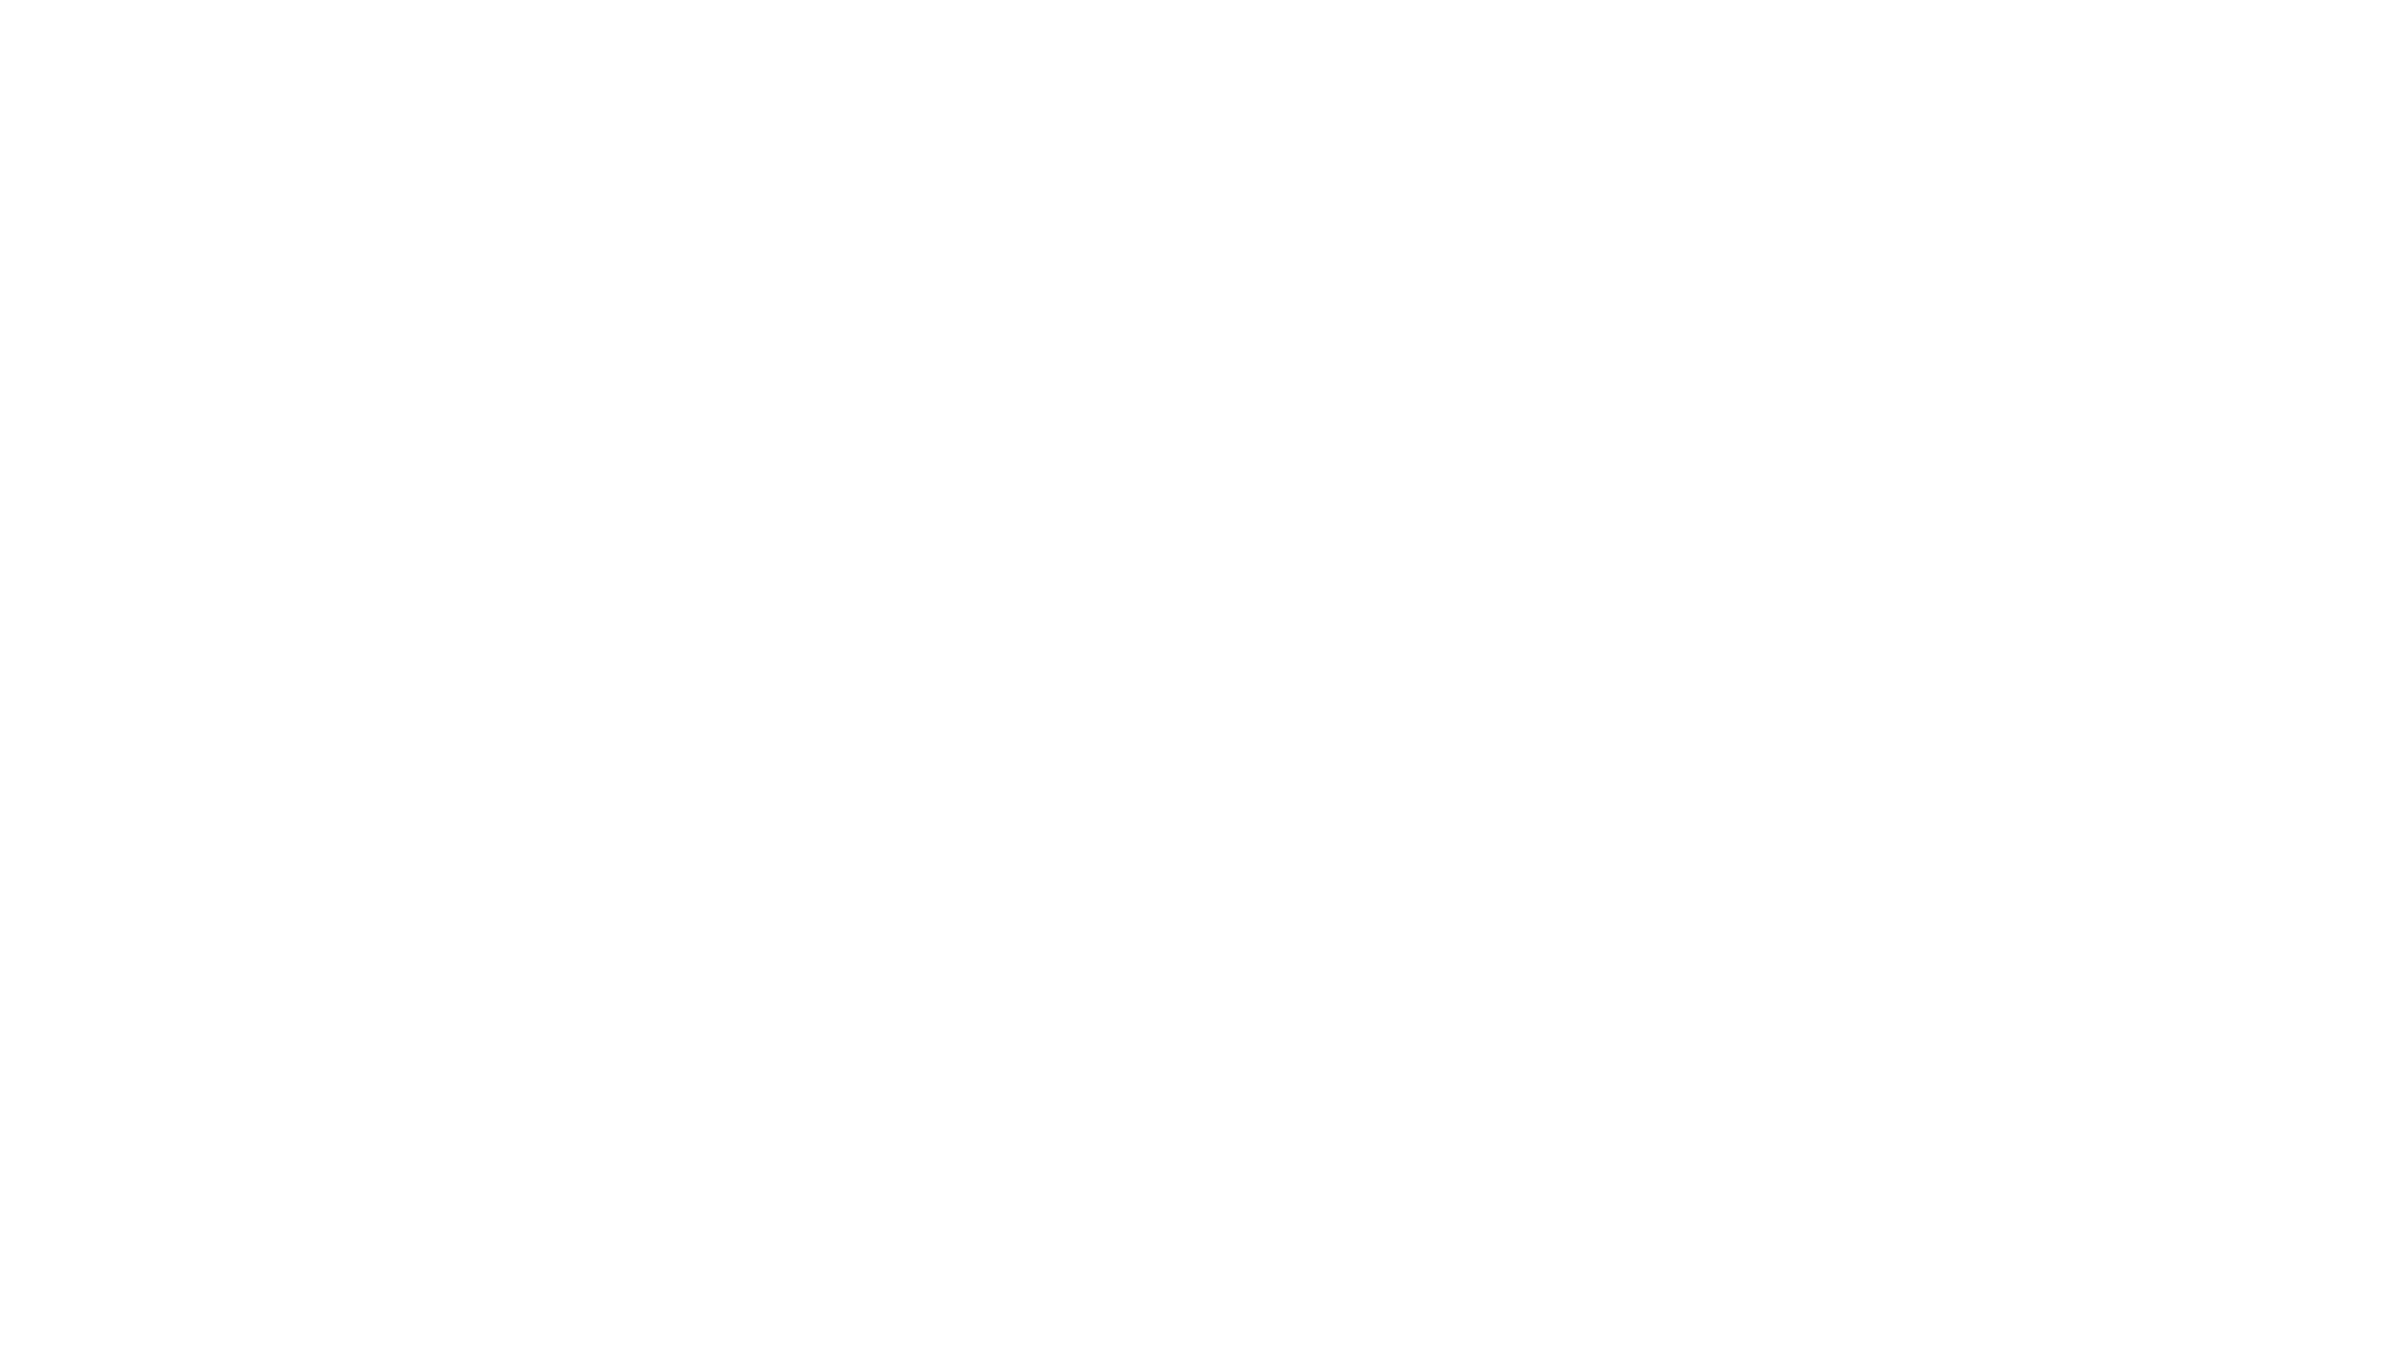 Agency Costa